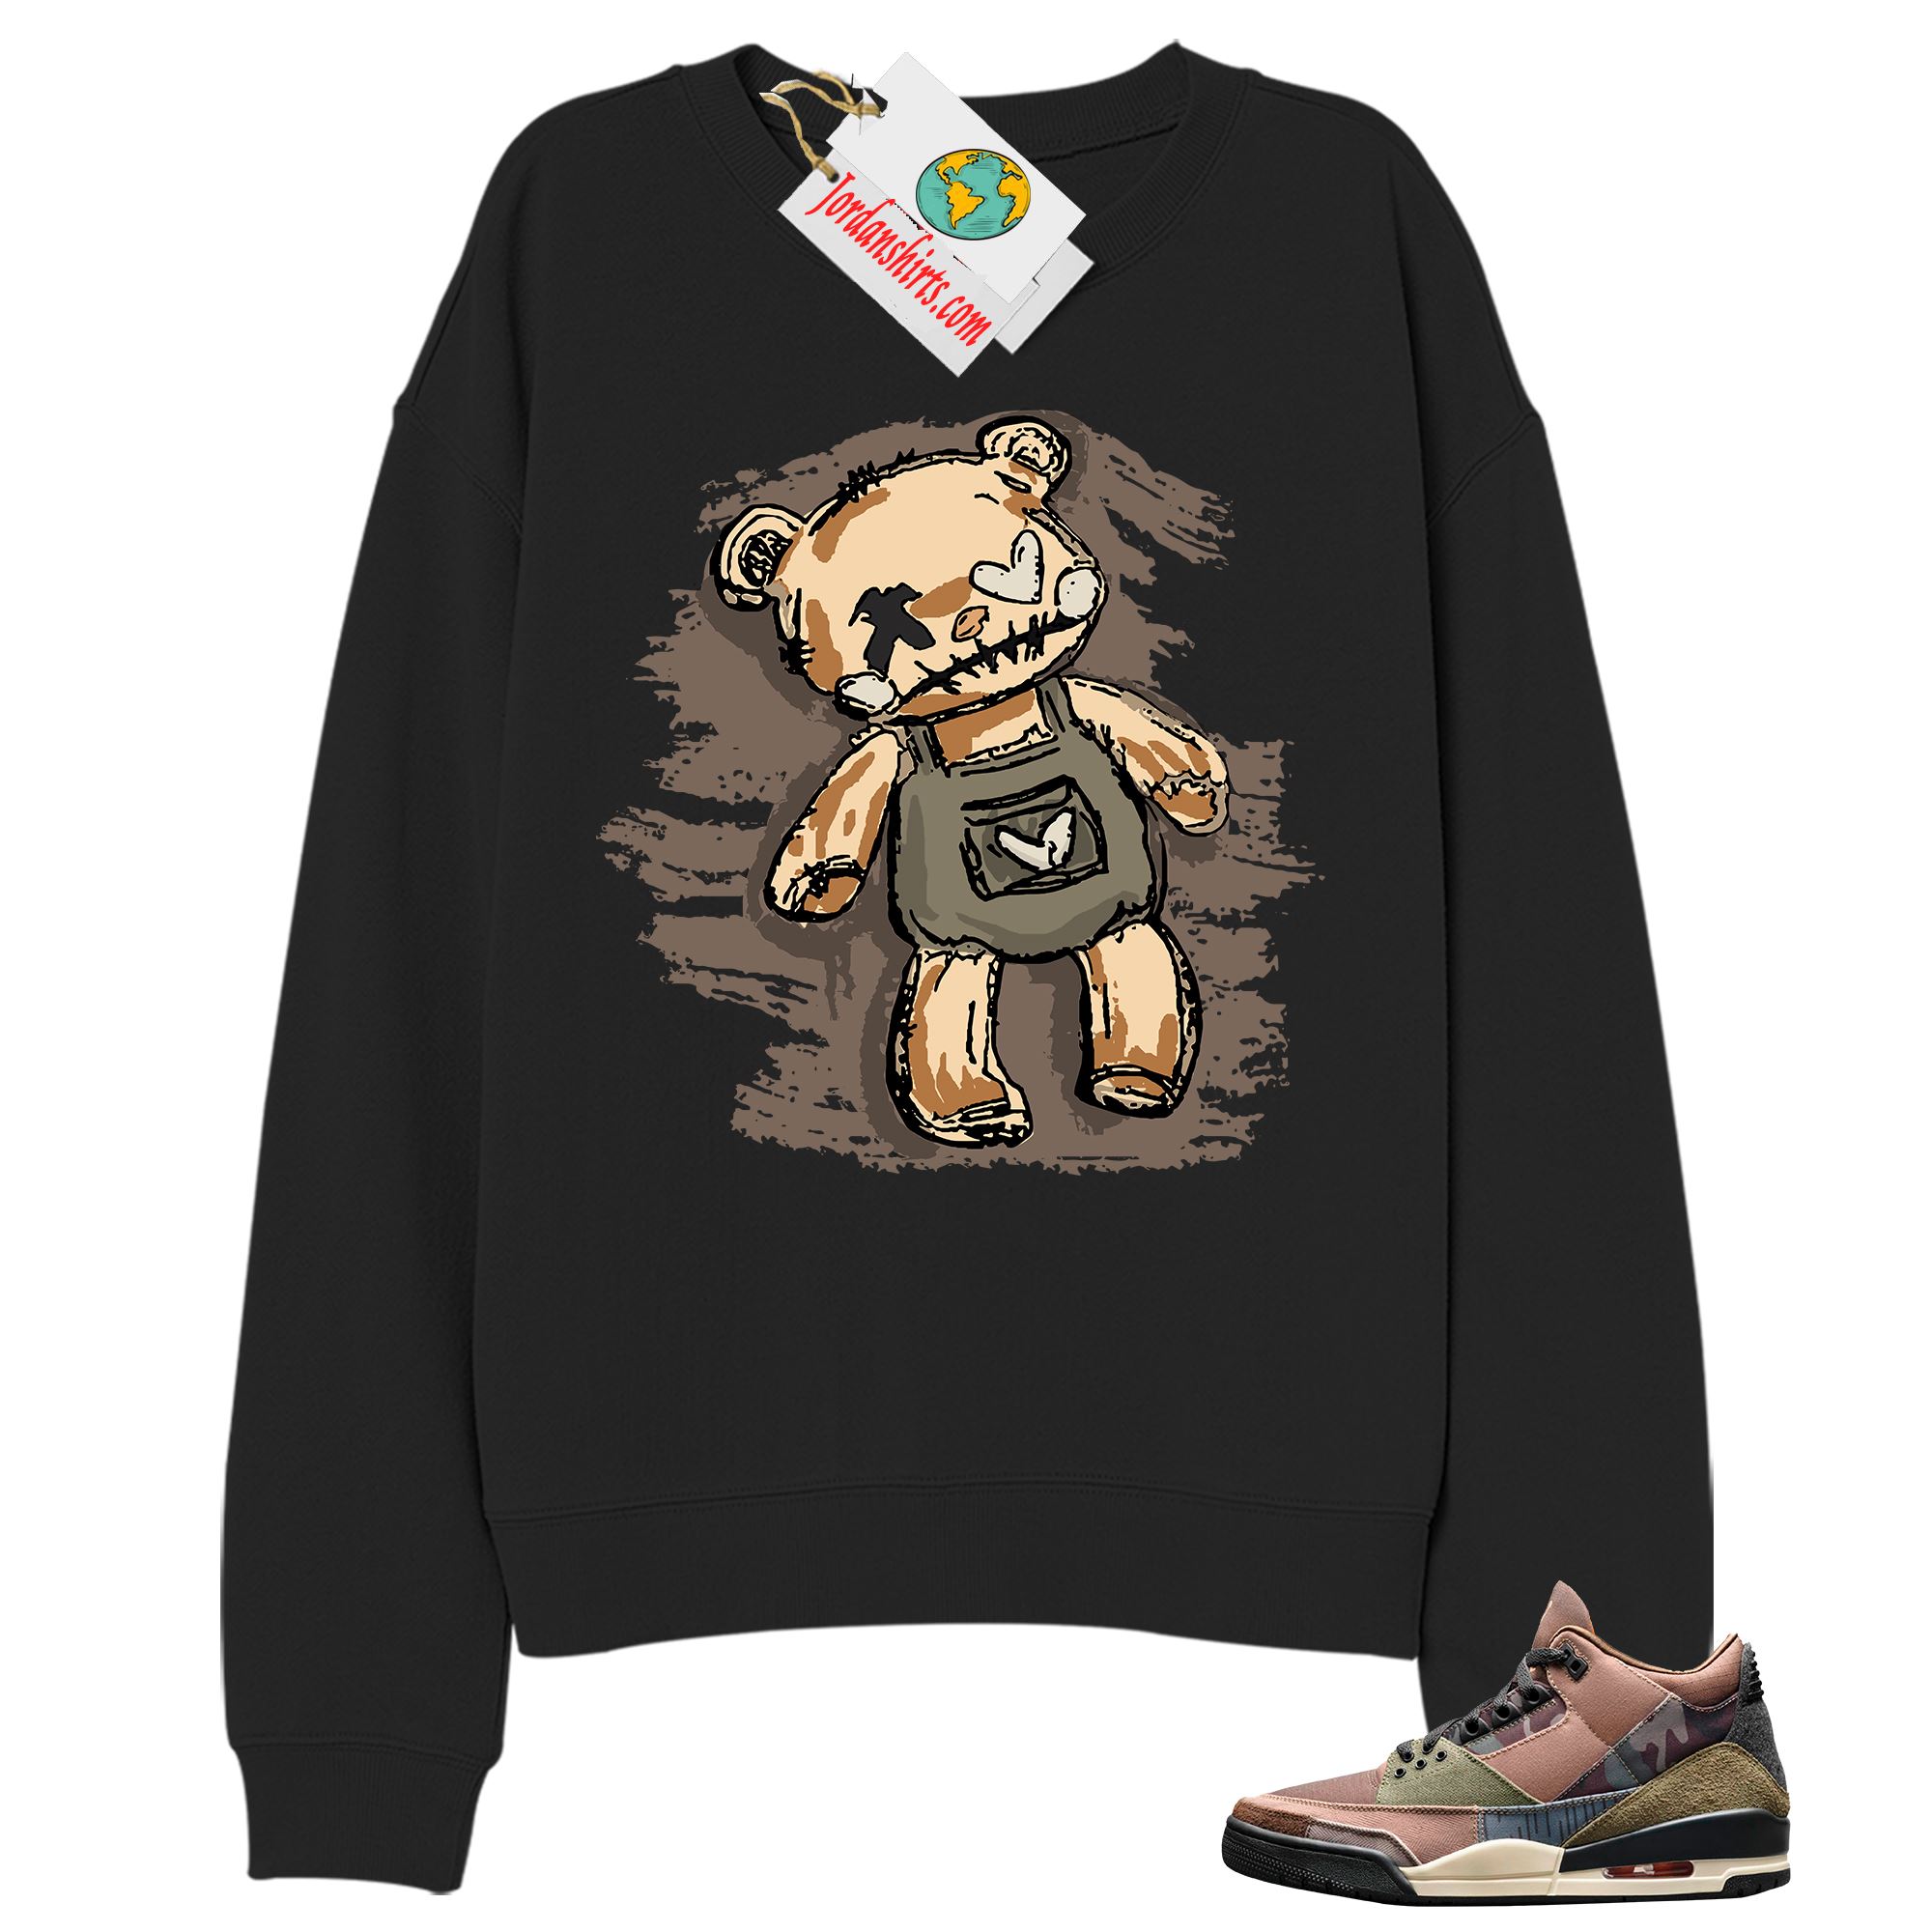 Jordan 3 Sweatshirt, Teddy Bear Broken Heart Black Sweatshirt Air Jordan 3 Camo 3s Full Size Up To 5xl